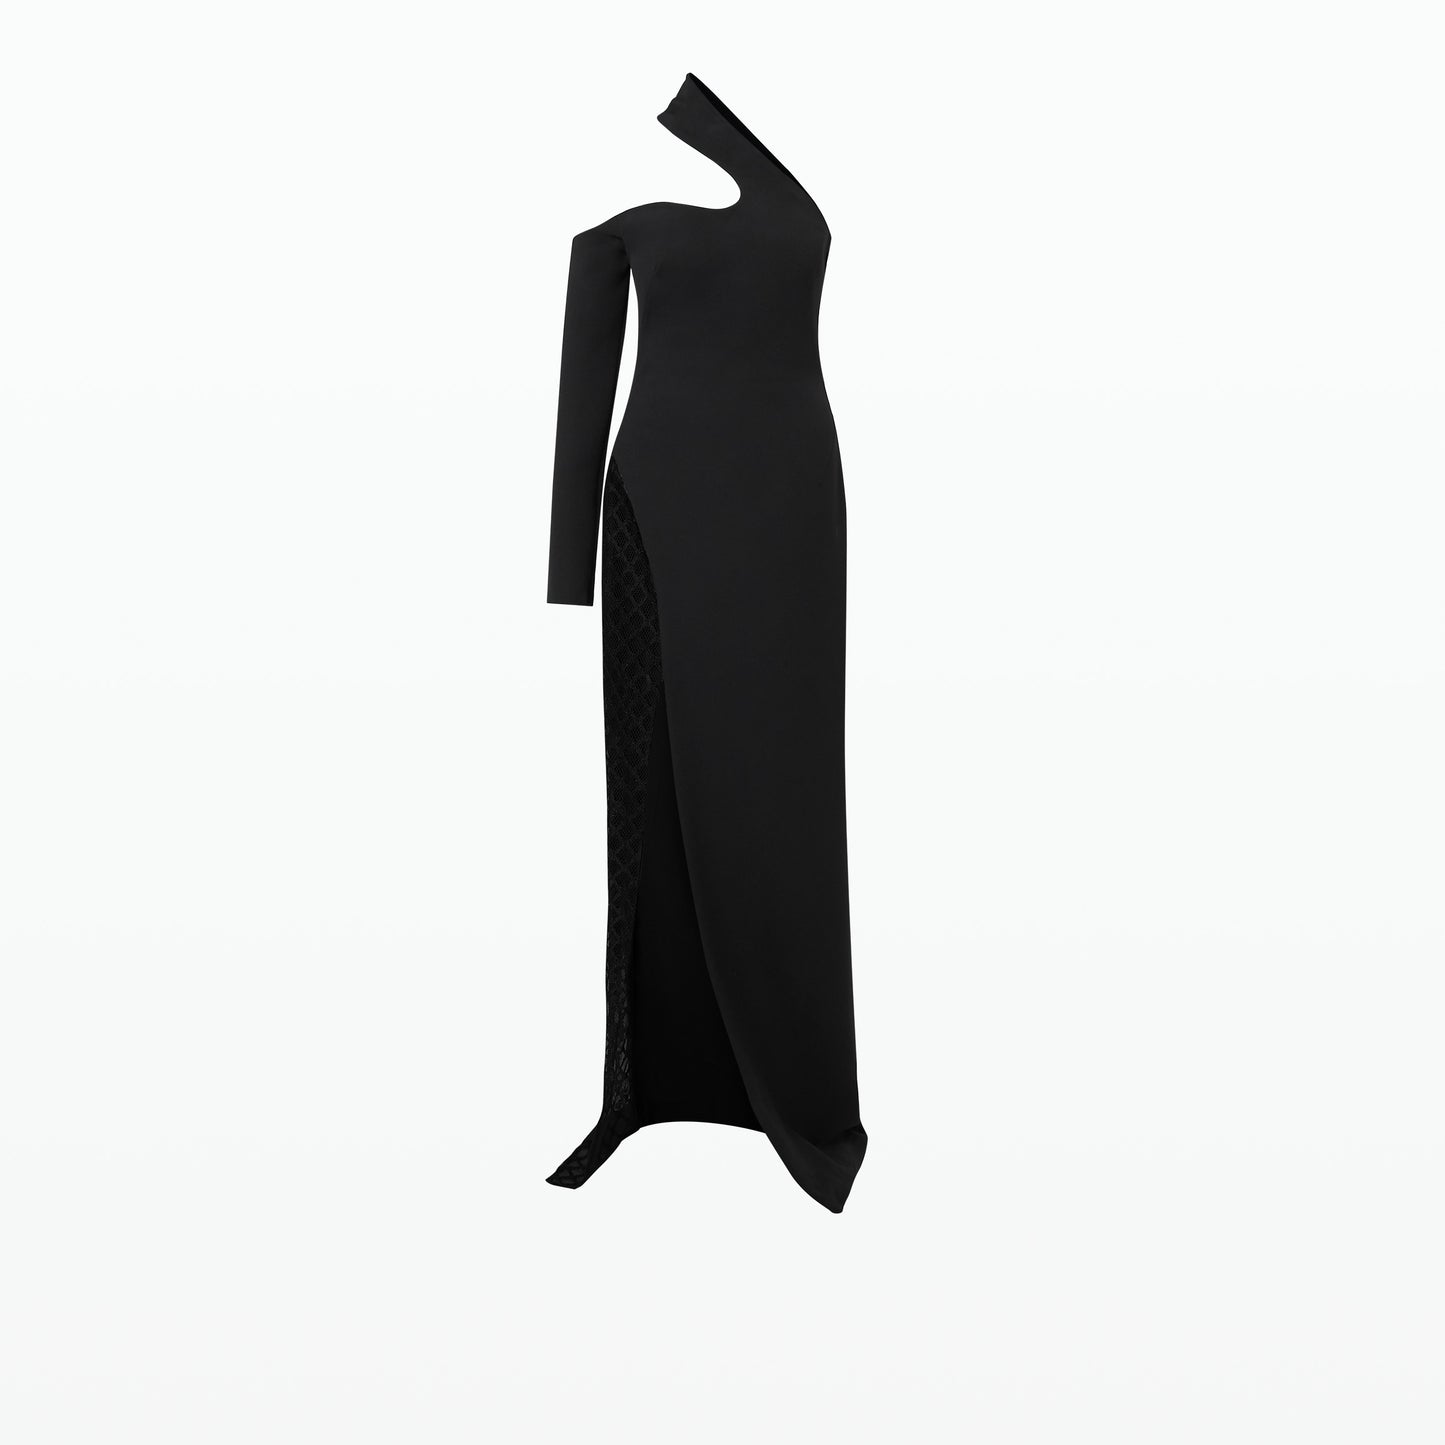 Sacha Black Long Dress